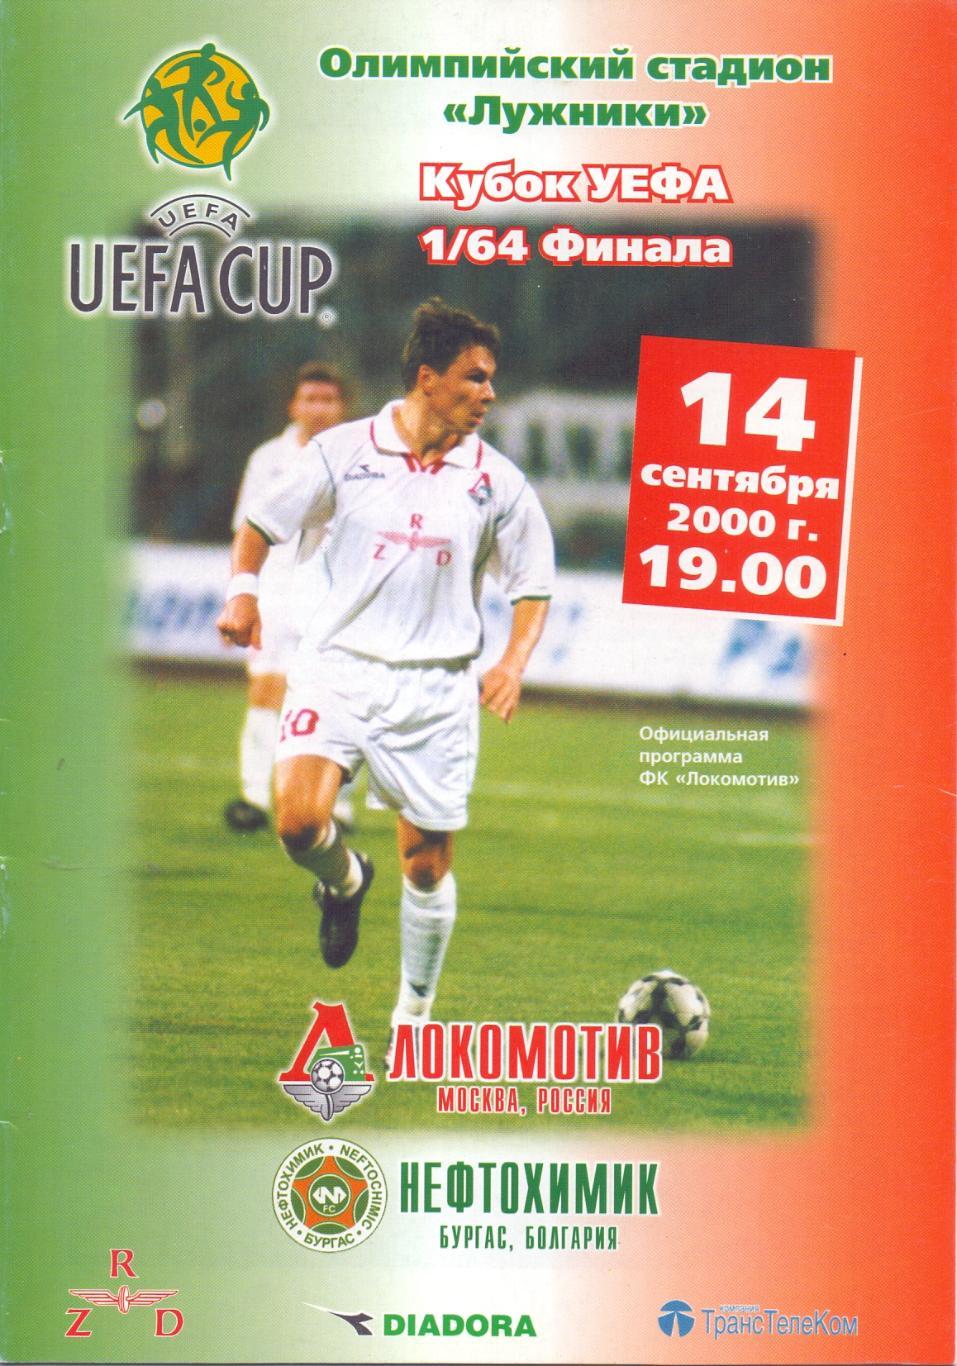 Кубок УЕФА. Локомотив Москва - Нефтохимик. 14.09.2000 года.